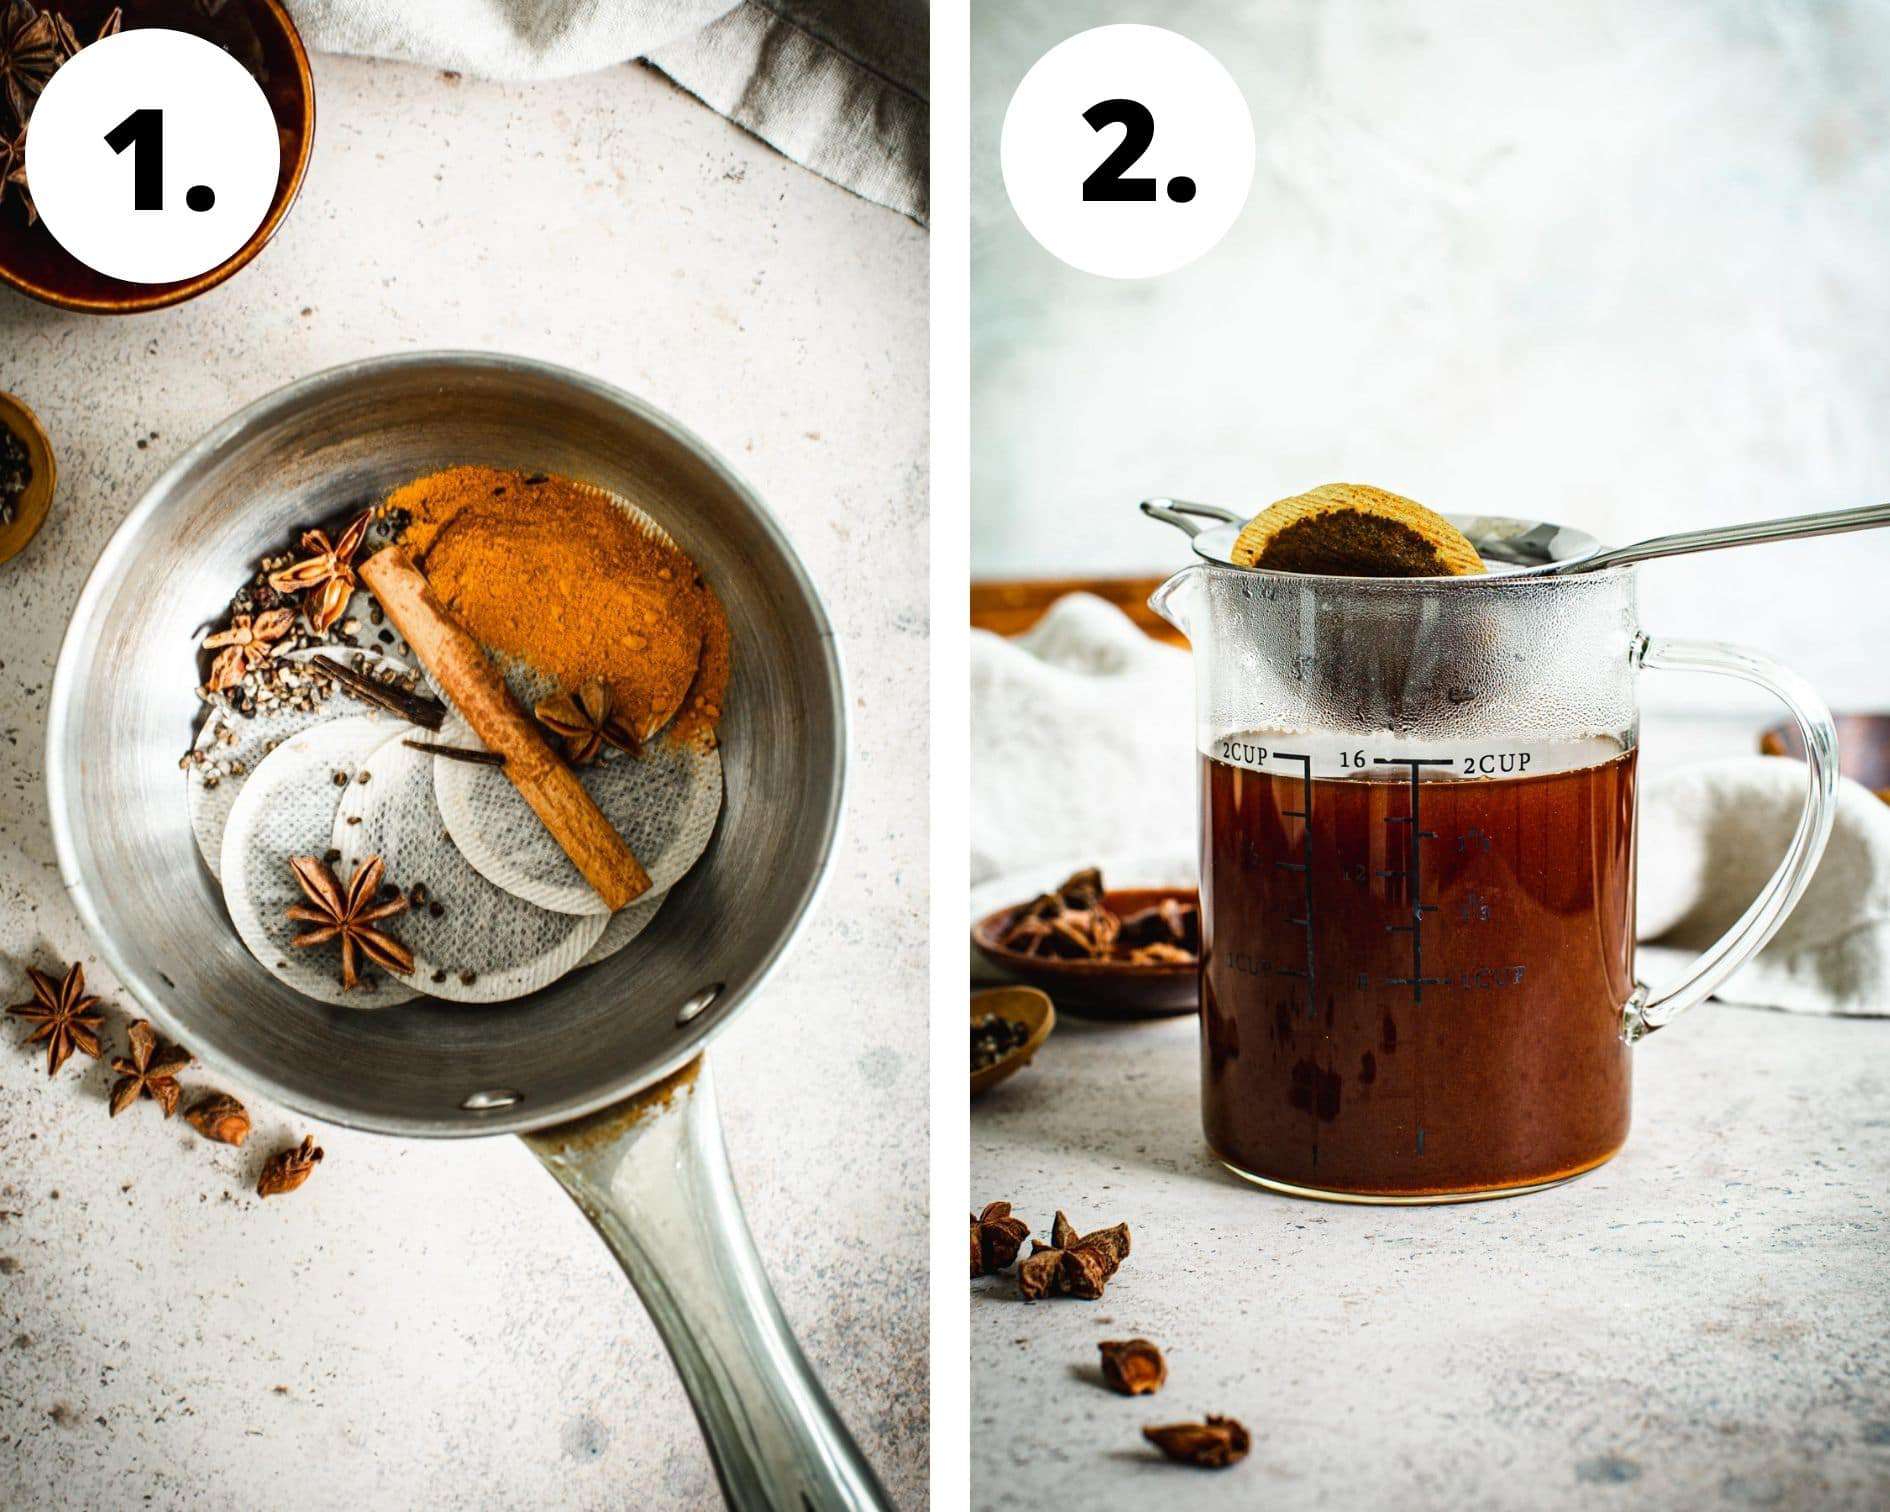 Thai iced tea process steps 1 and 2.